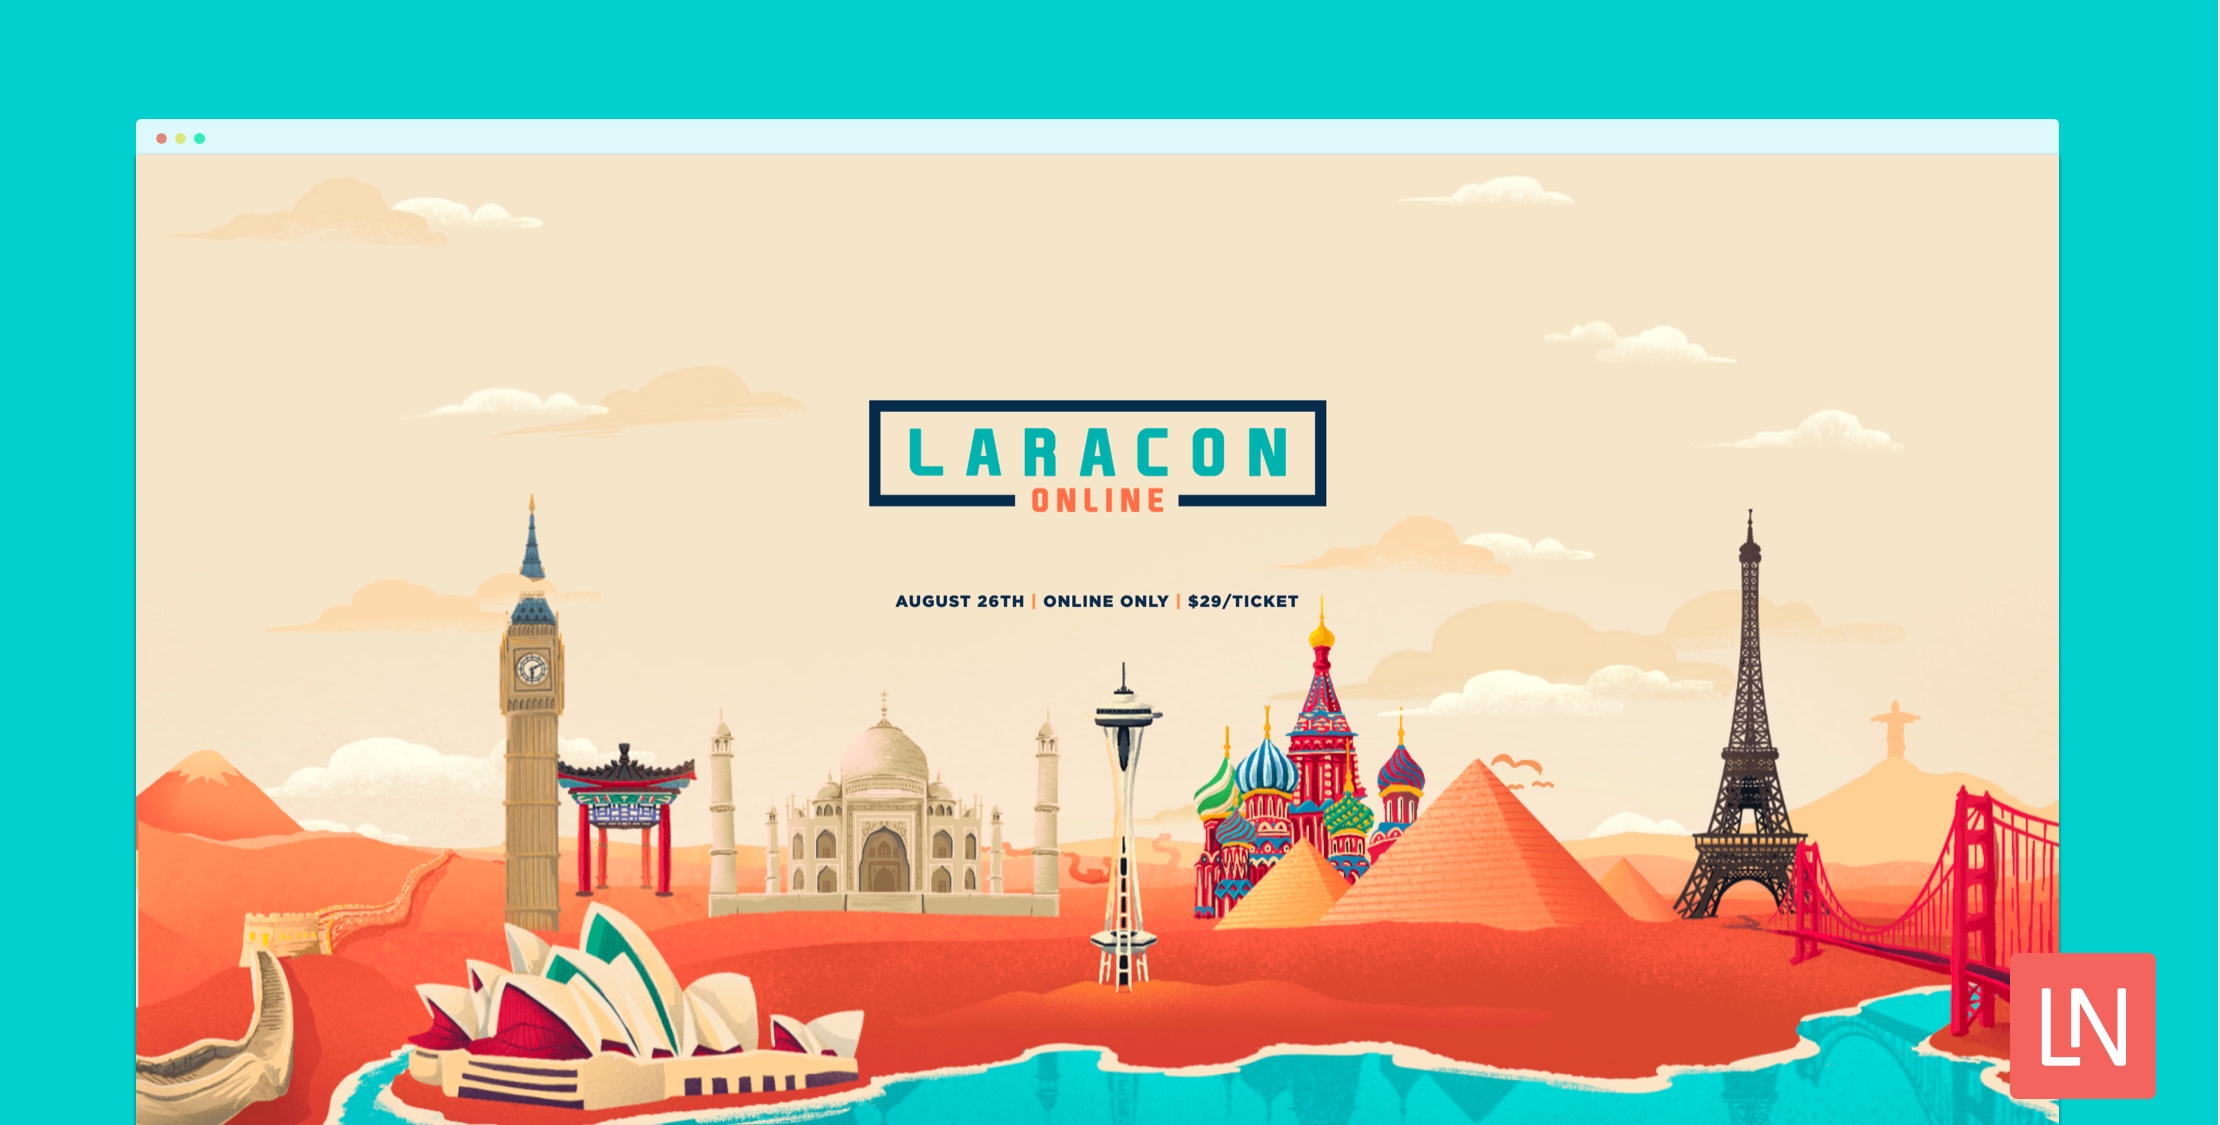 Laracon Online 2020 image